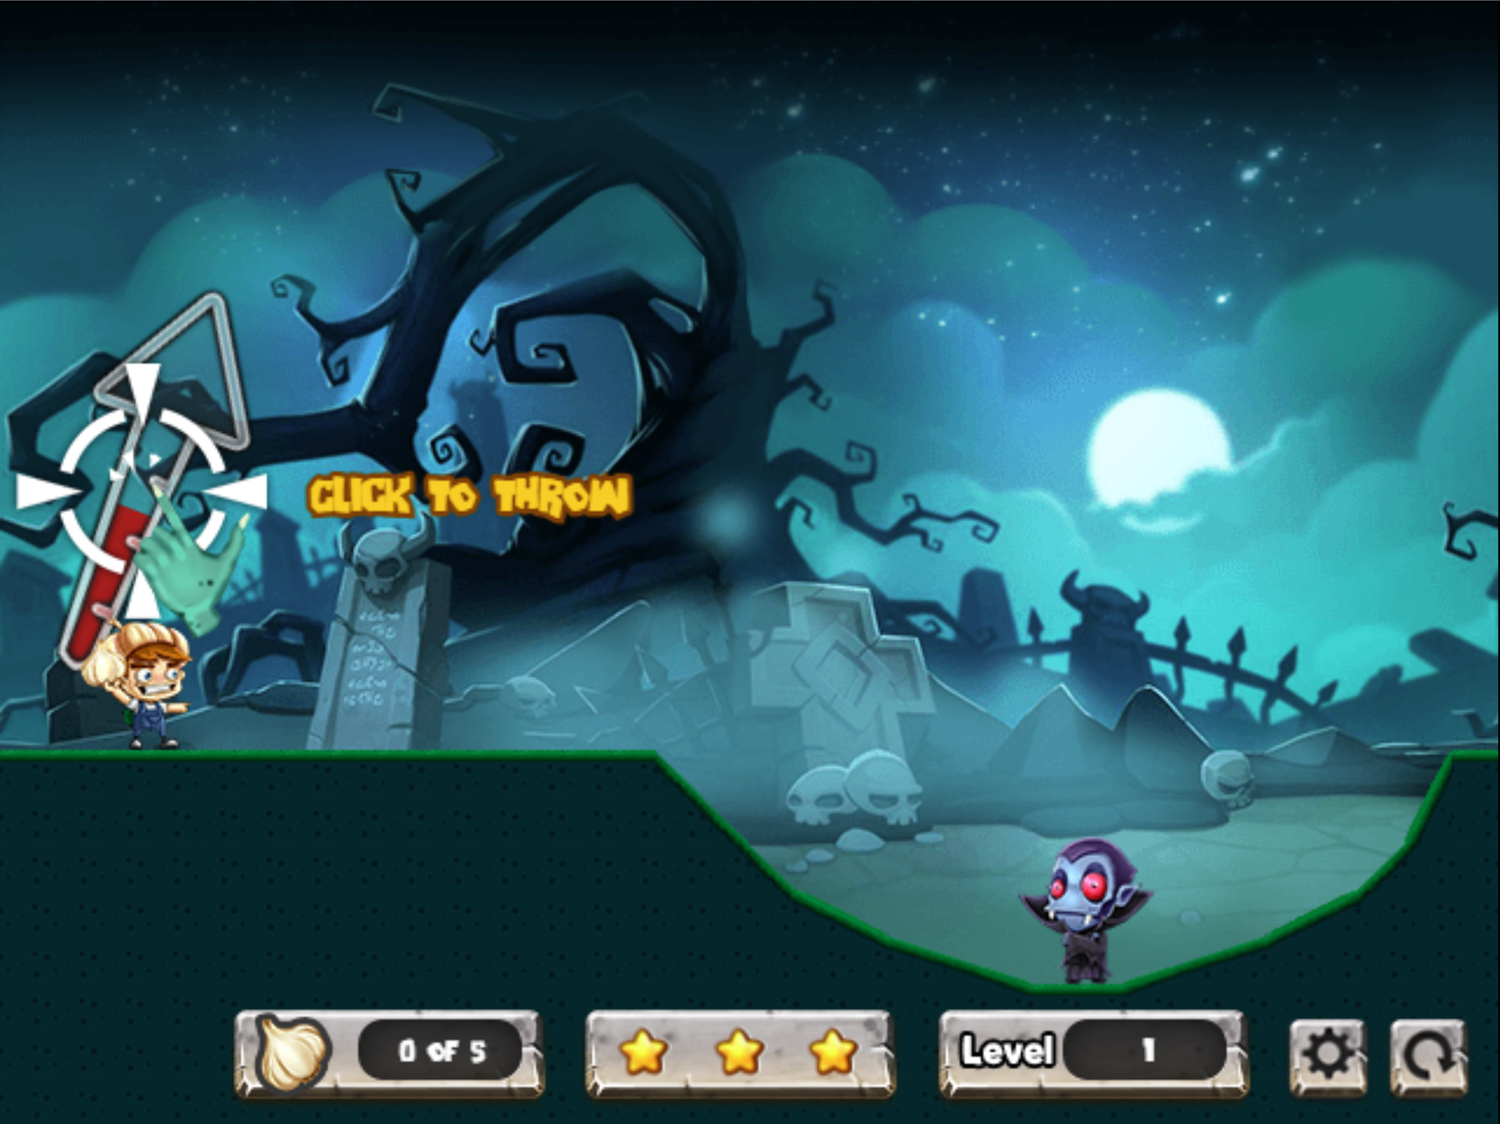 Vampires And Garlic Game Click to Throw Instructions Screenshot.